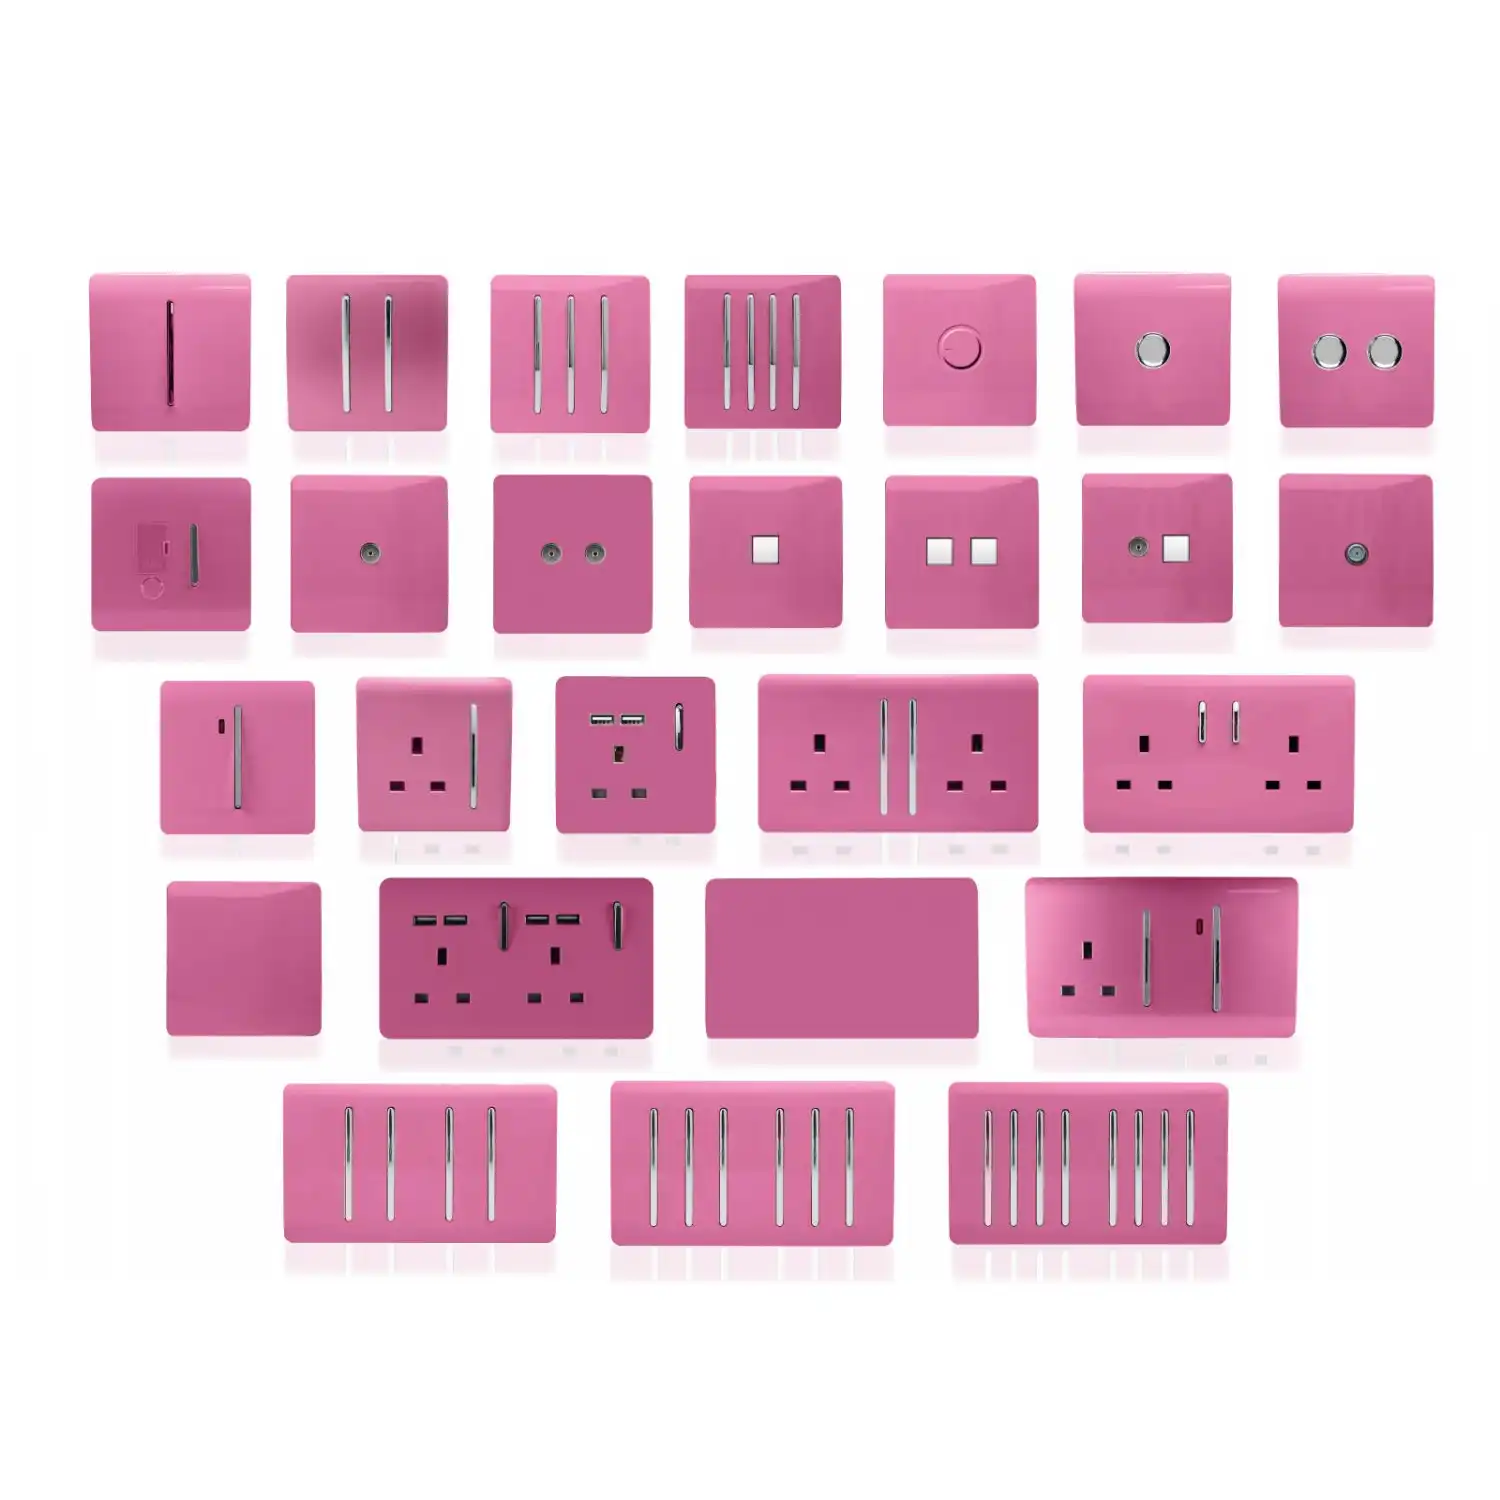 Trendi, Artistic Modern 1 Gang Doorbell Pink Finish, BRITISH MADE, (25mm Back Box Required), 5yrs Warranty